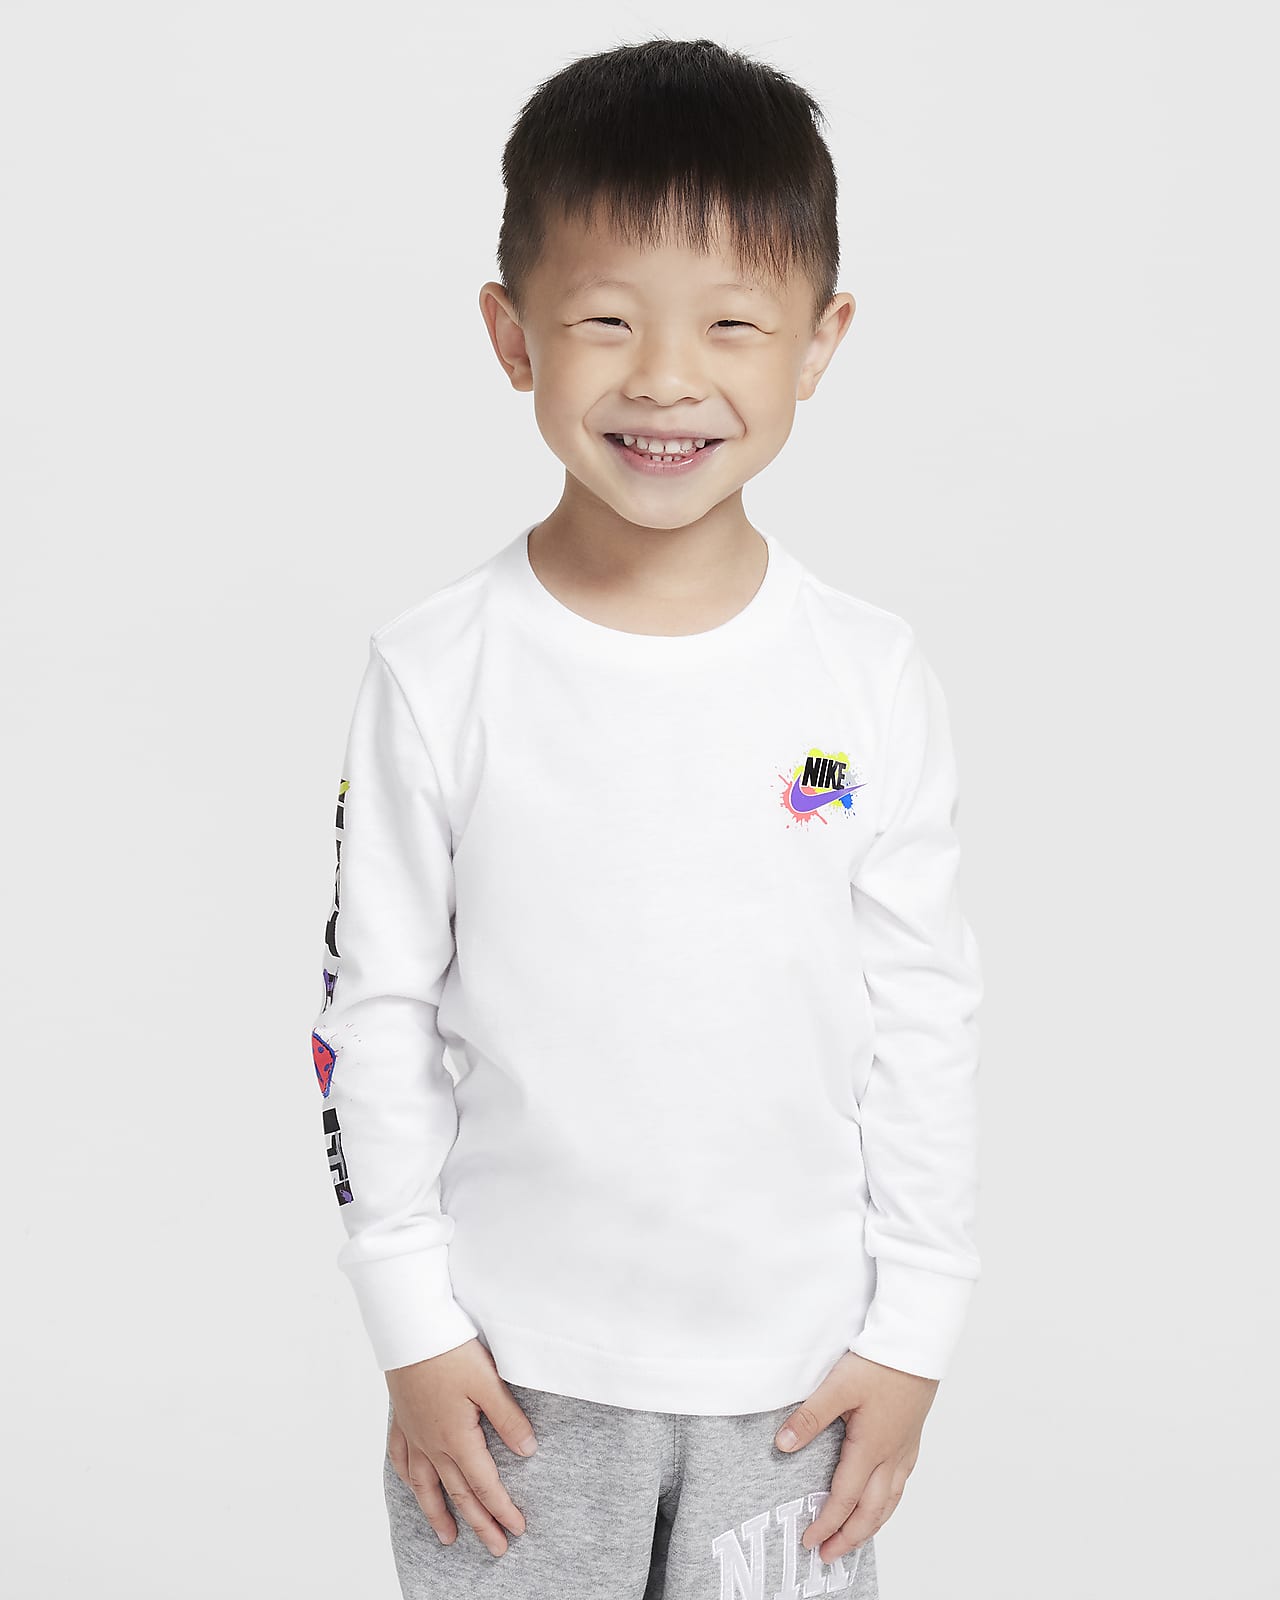 Nike "Express Yourself" Toddler Long Sleeve T-Shirt